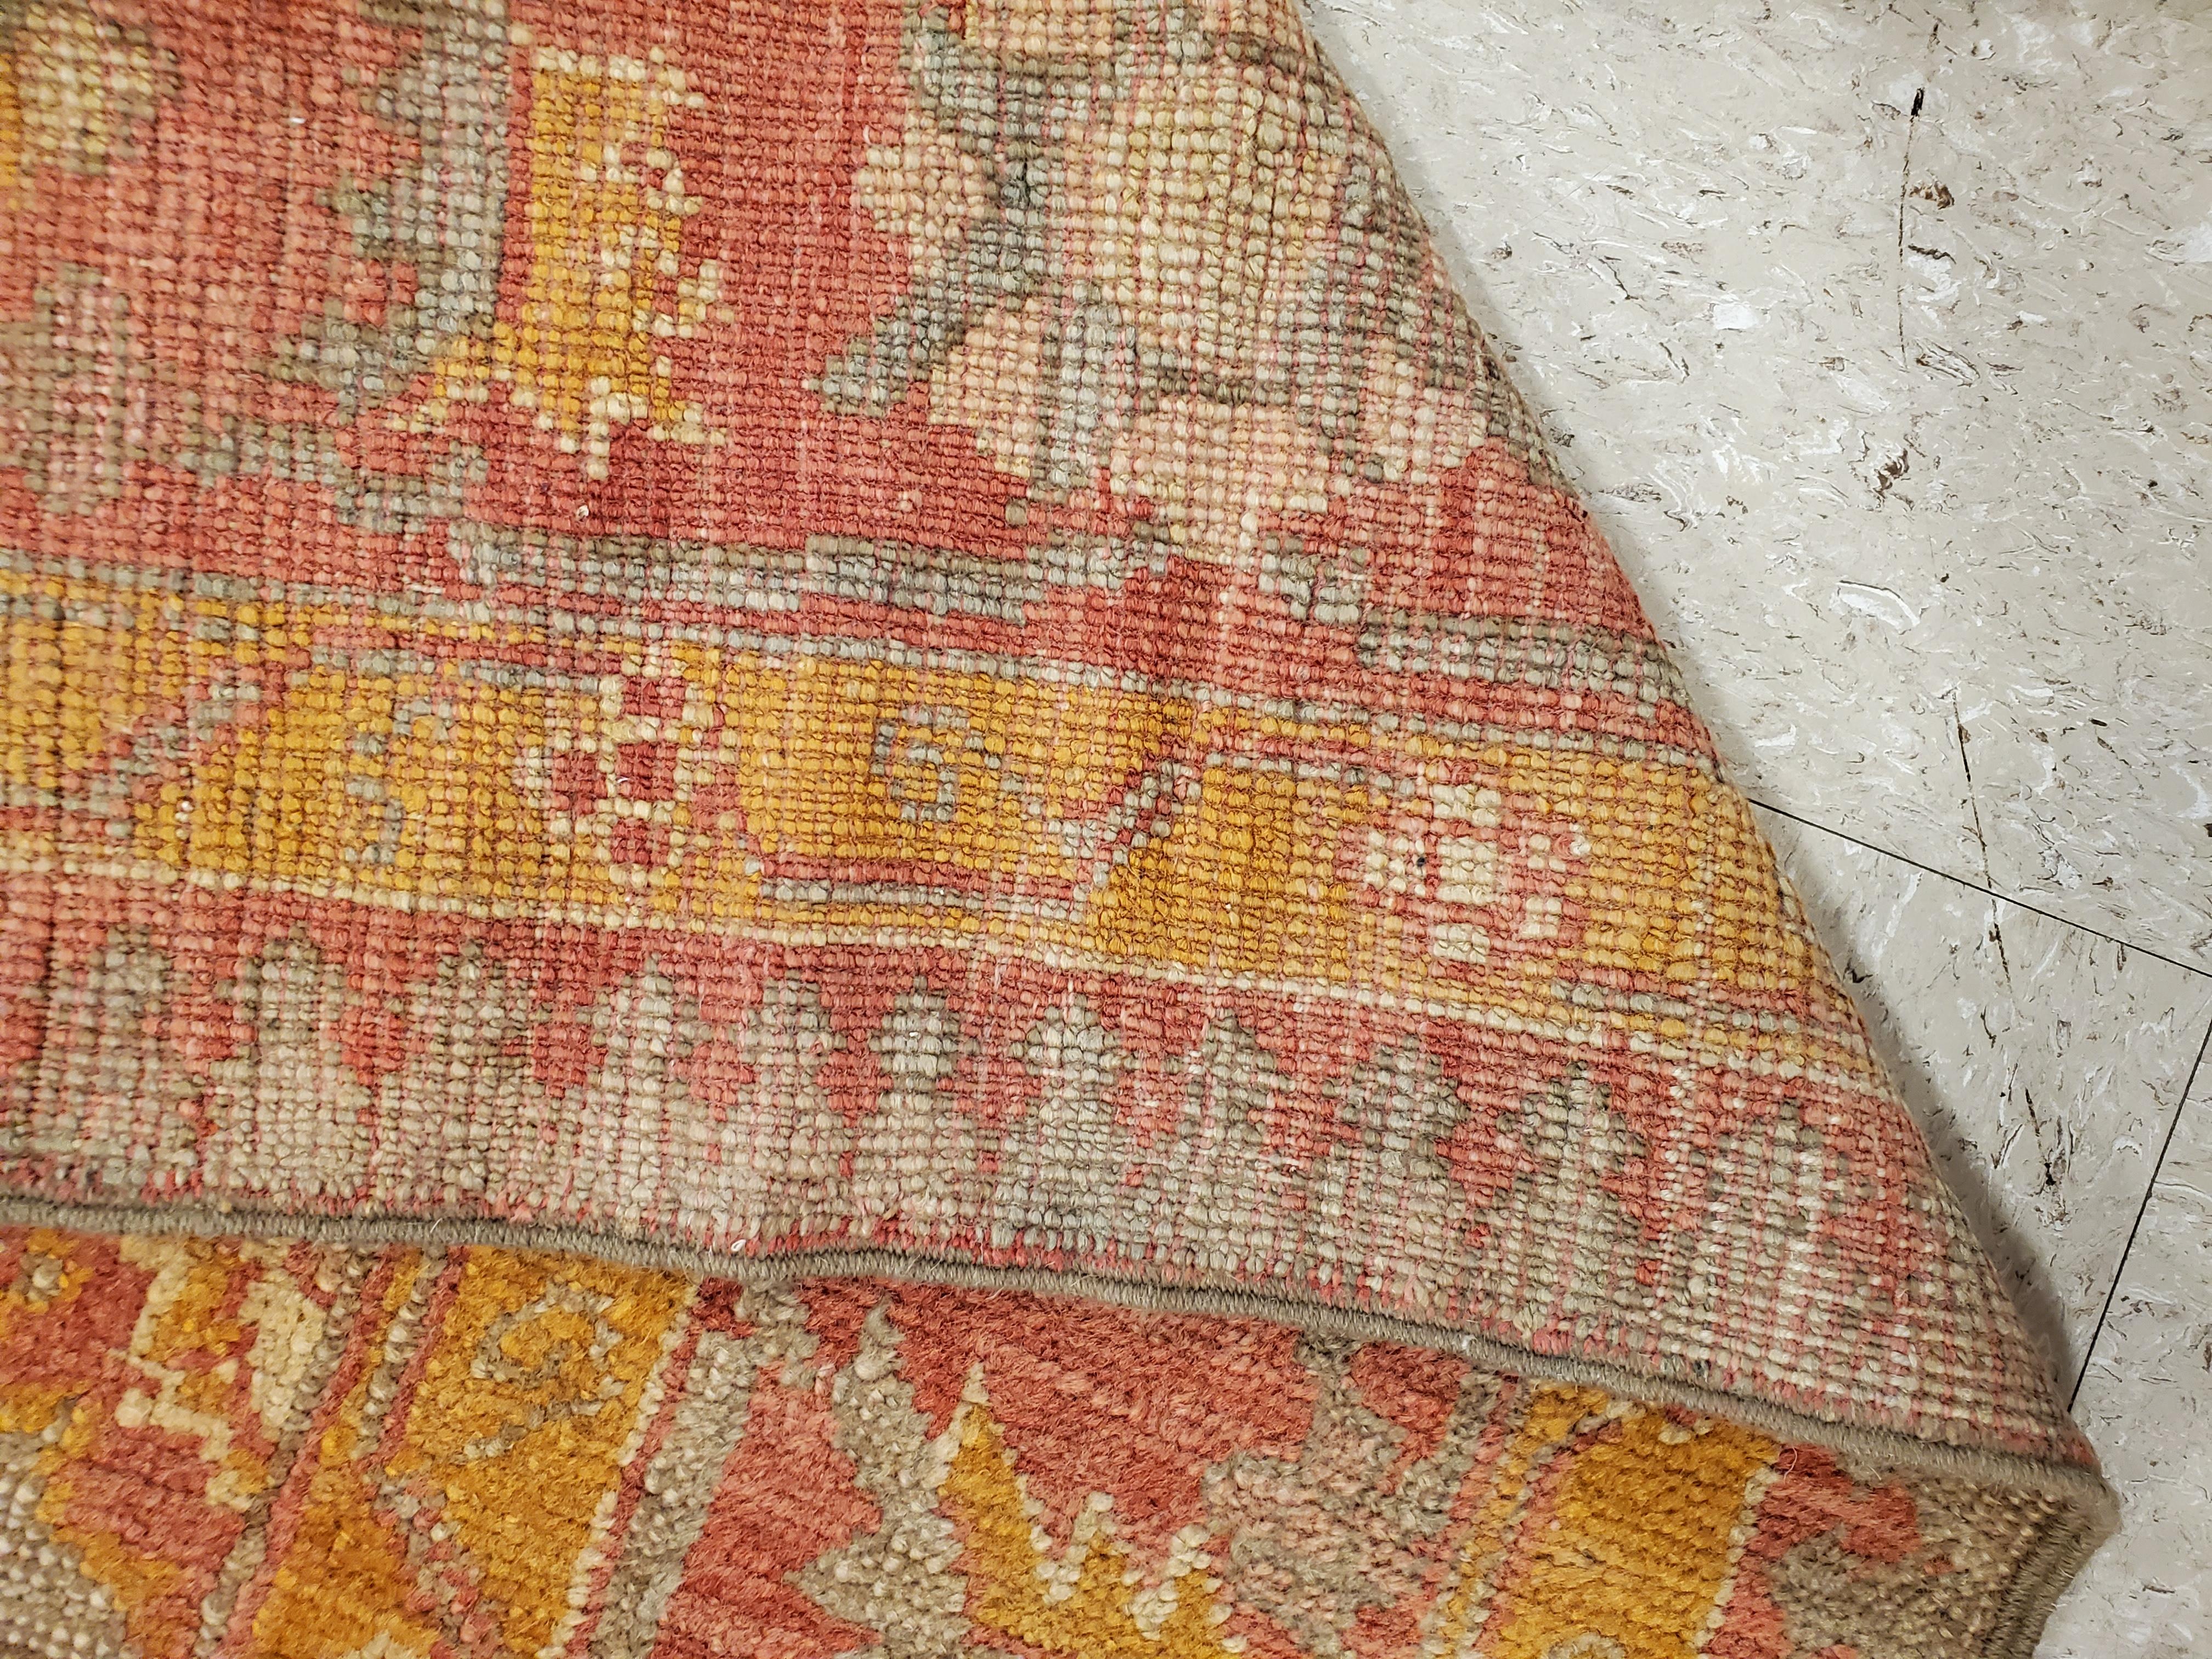 19th Century Antique Oushak Carpet, Handmade Turkish Oriental Rug, Saffron, Coral, Light Blue For Sale